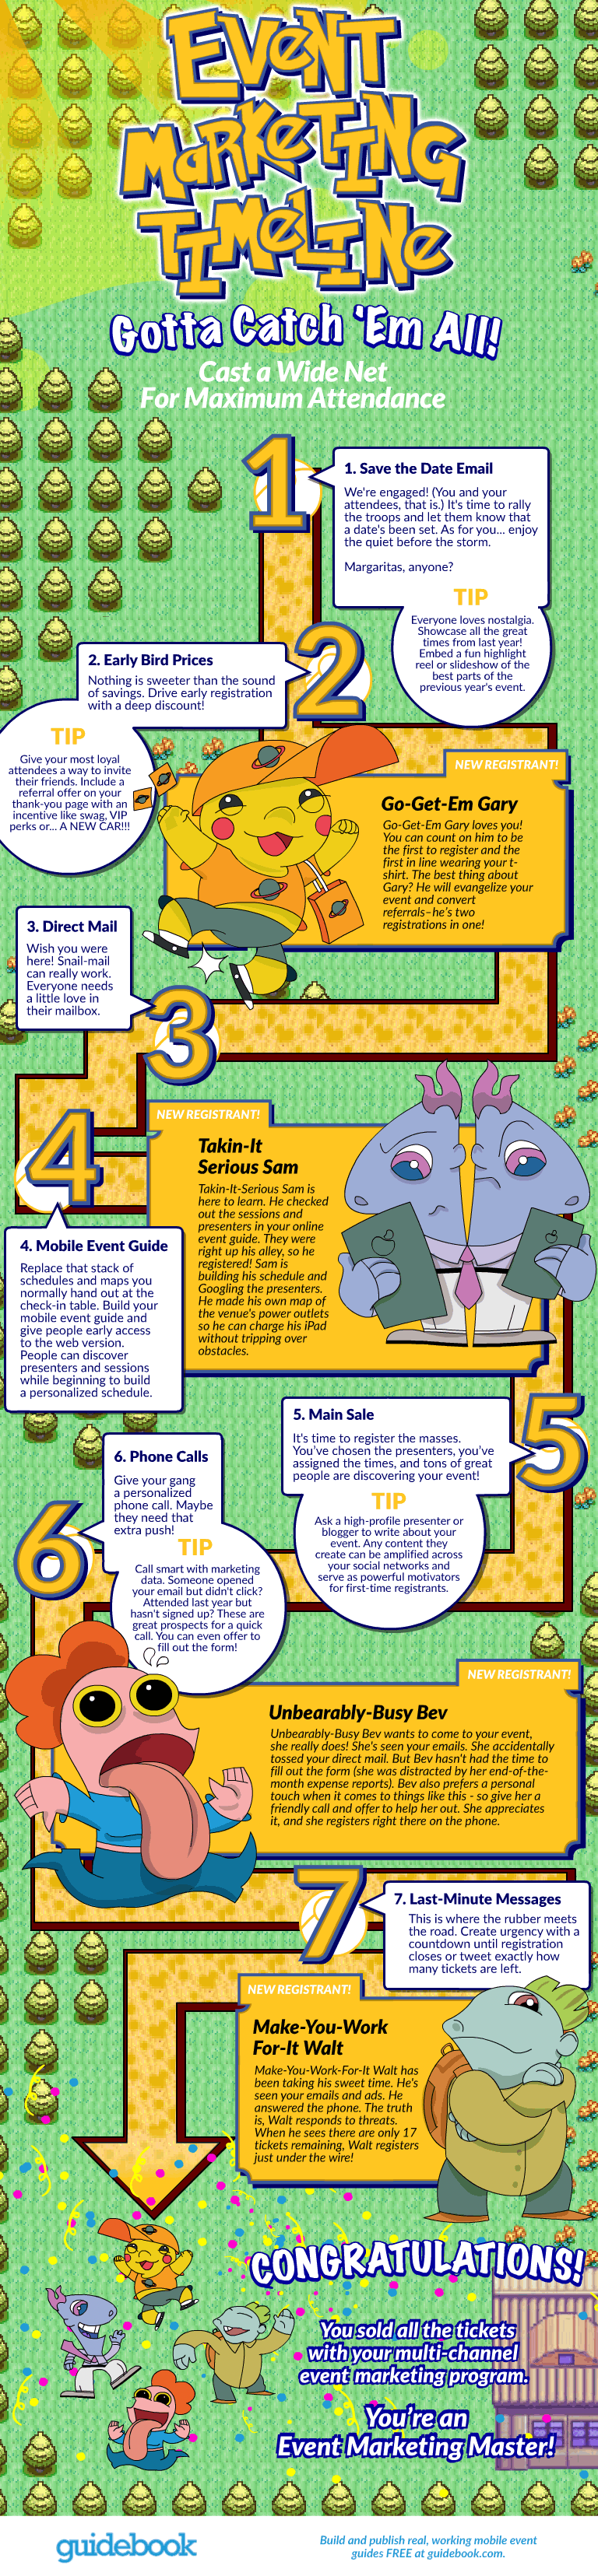 guidebook event marketing timeline infographic pokemon